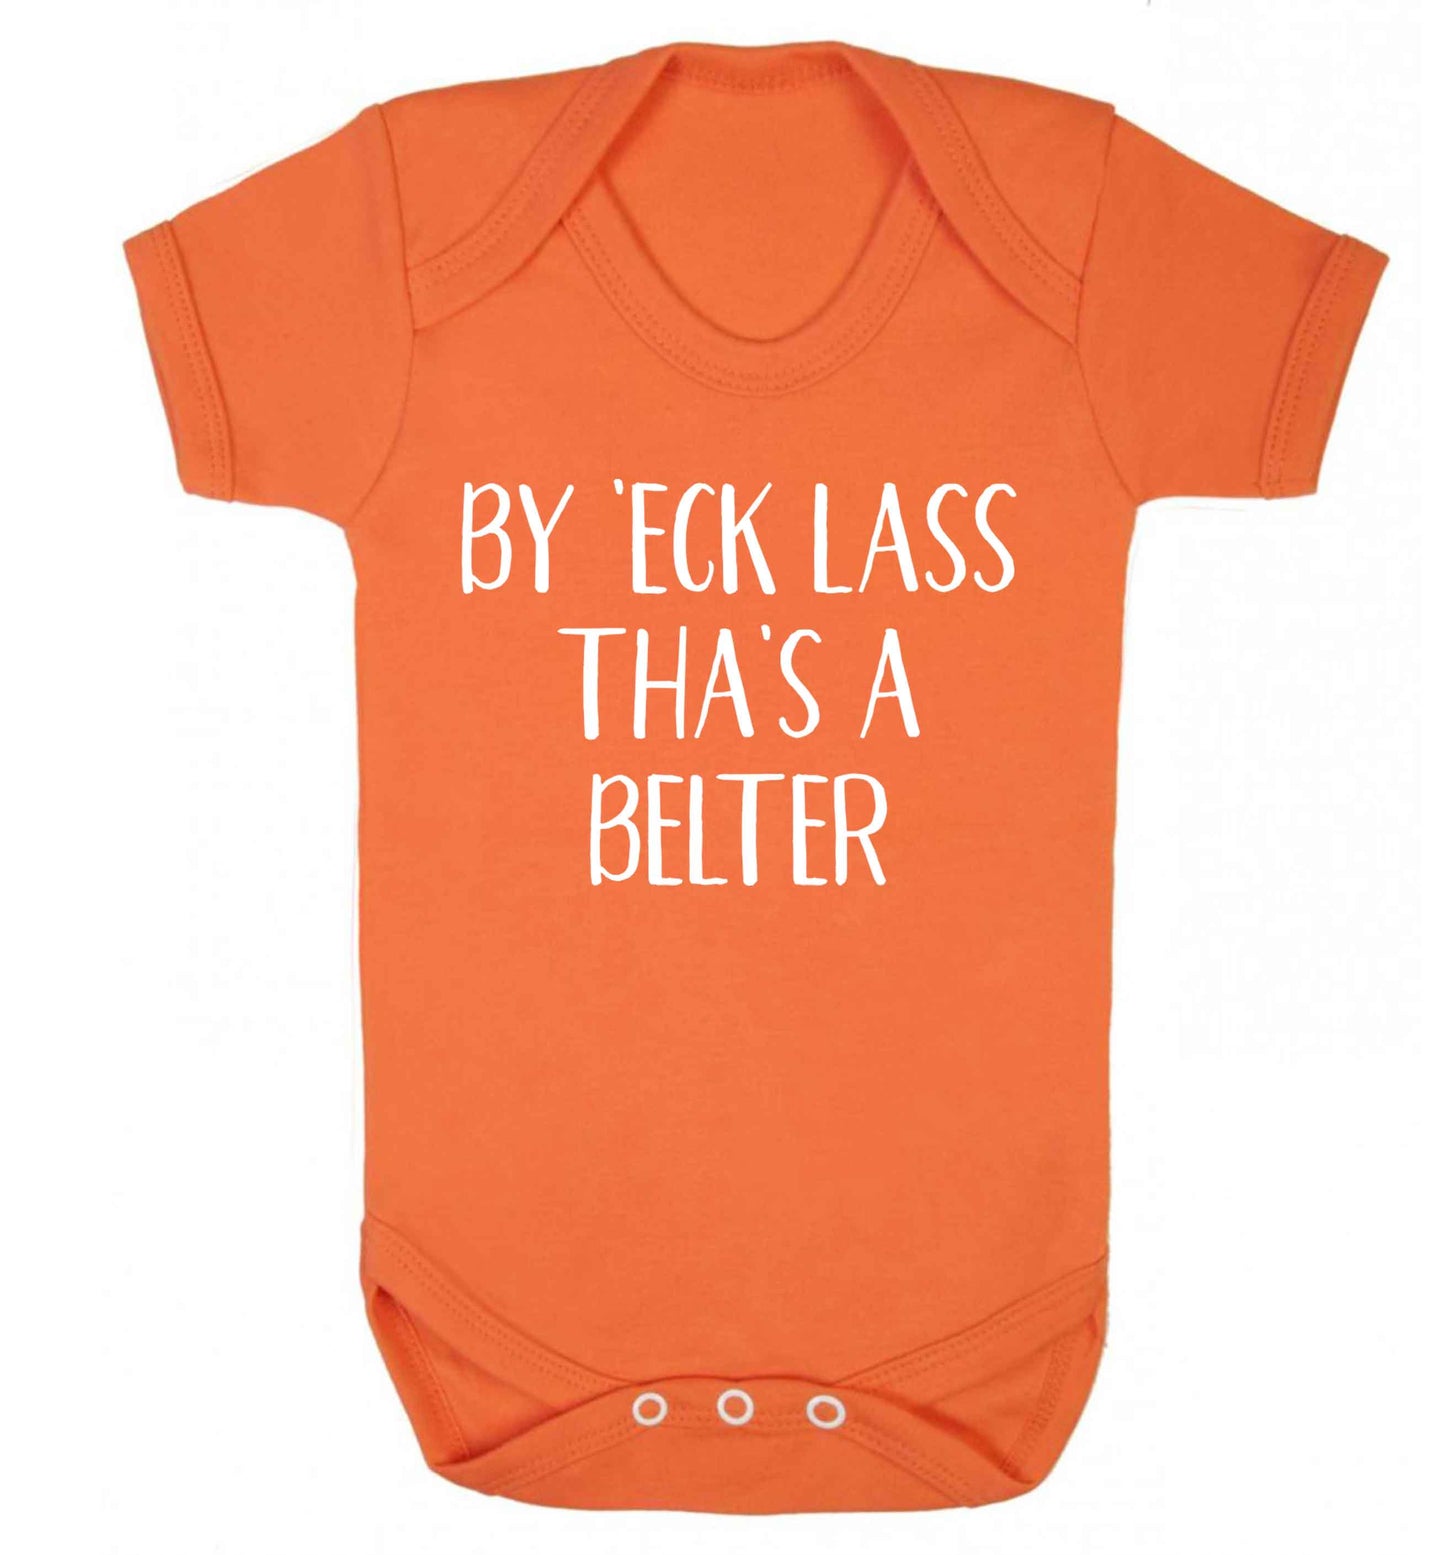 Be 'eck lass tha's a belter Baby Vest orange 18-24 months